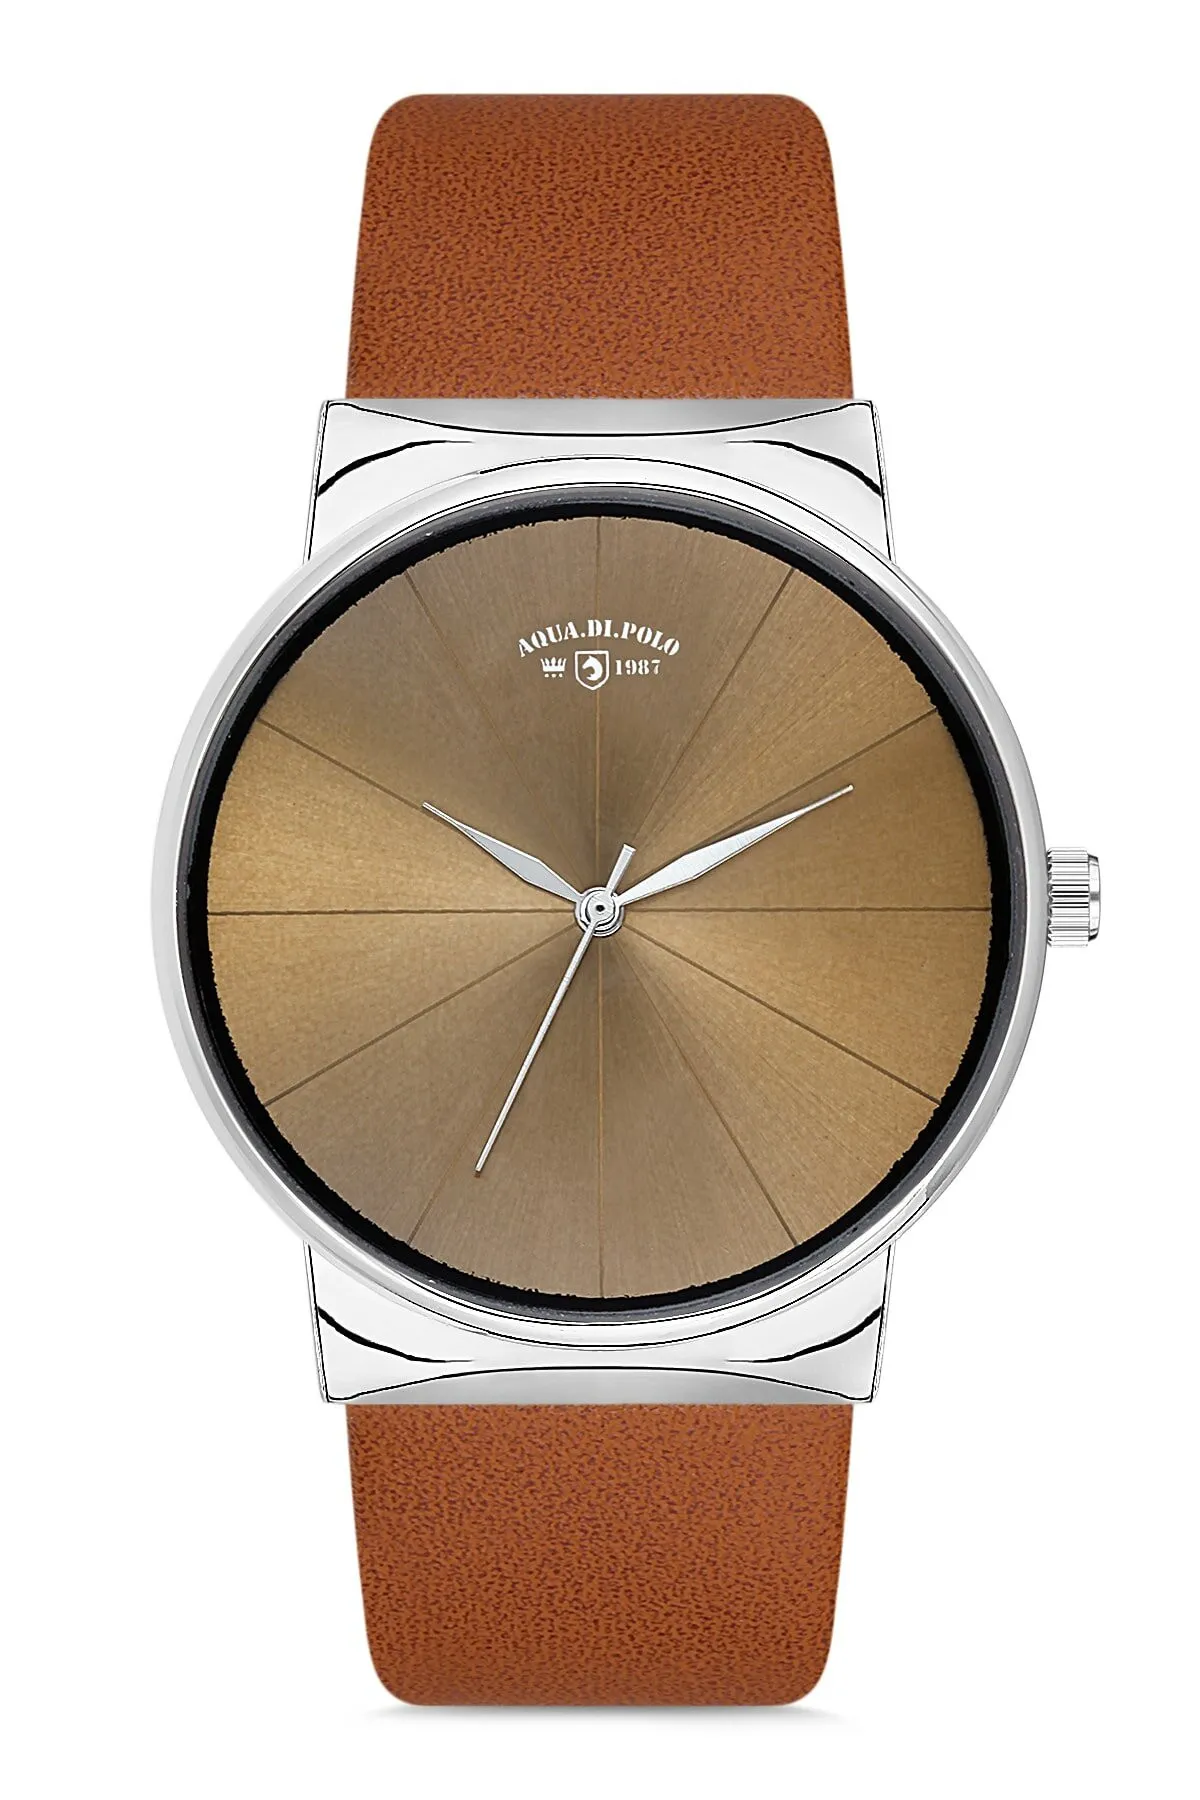 Кожаные наручные часы унисекс Di Polo apwa028803#2